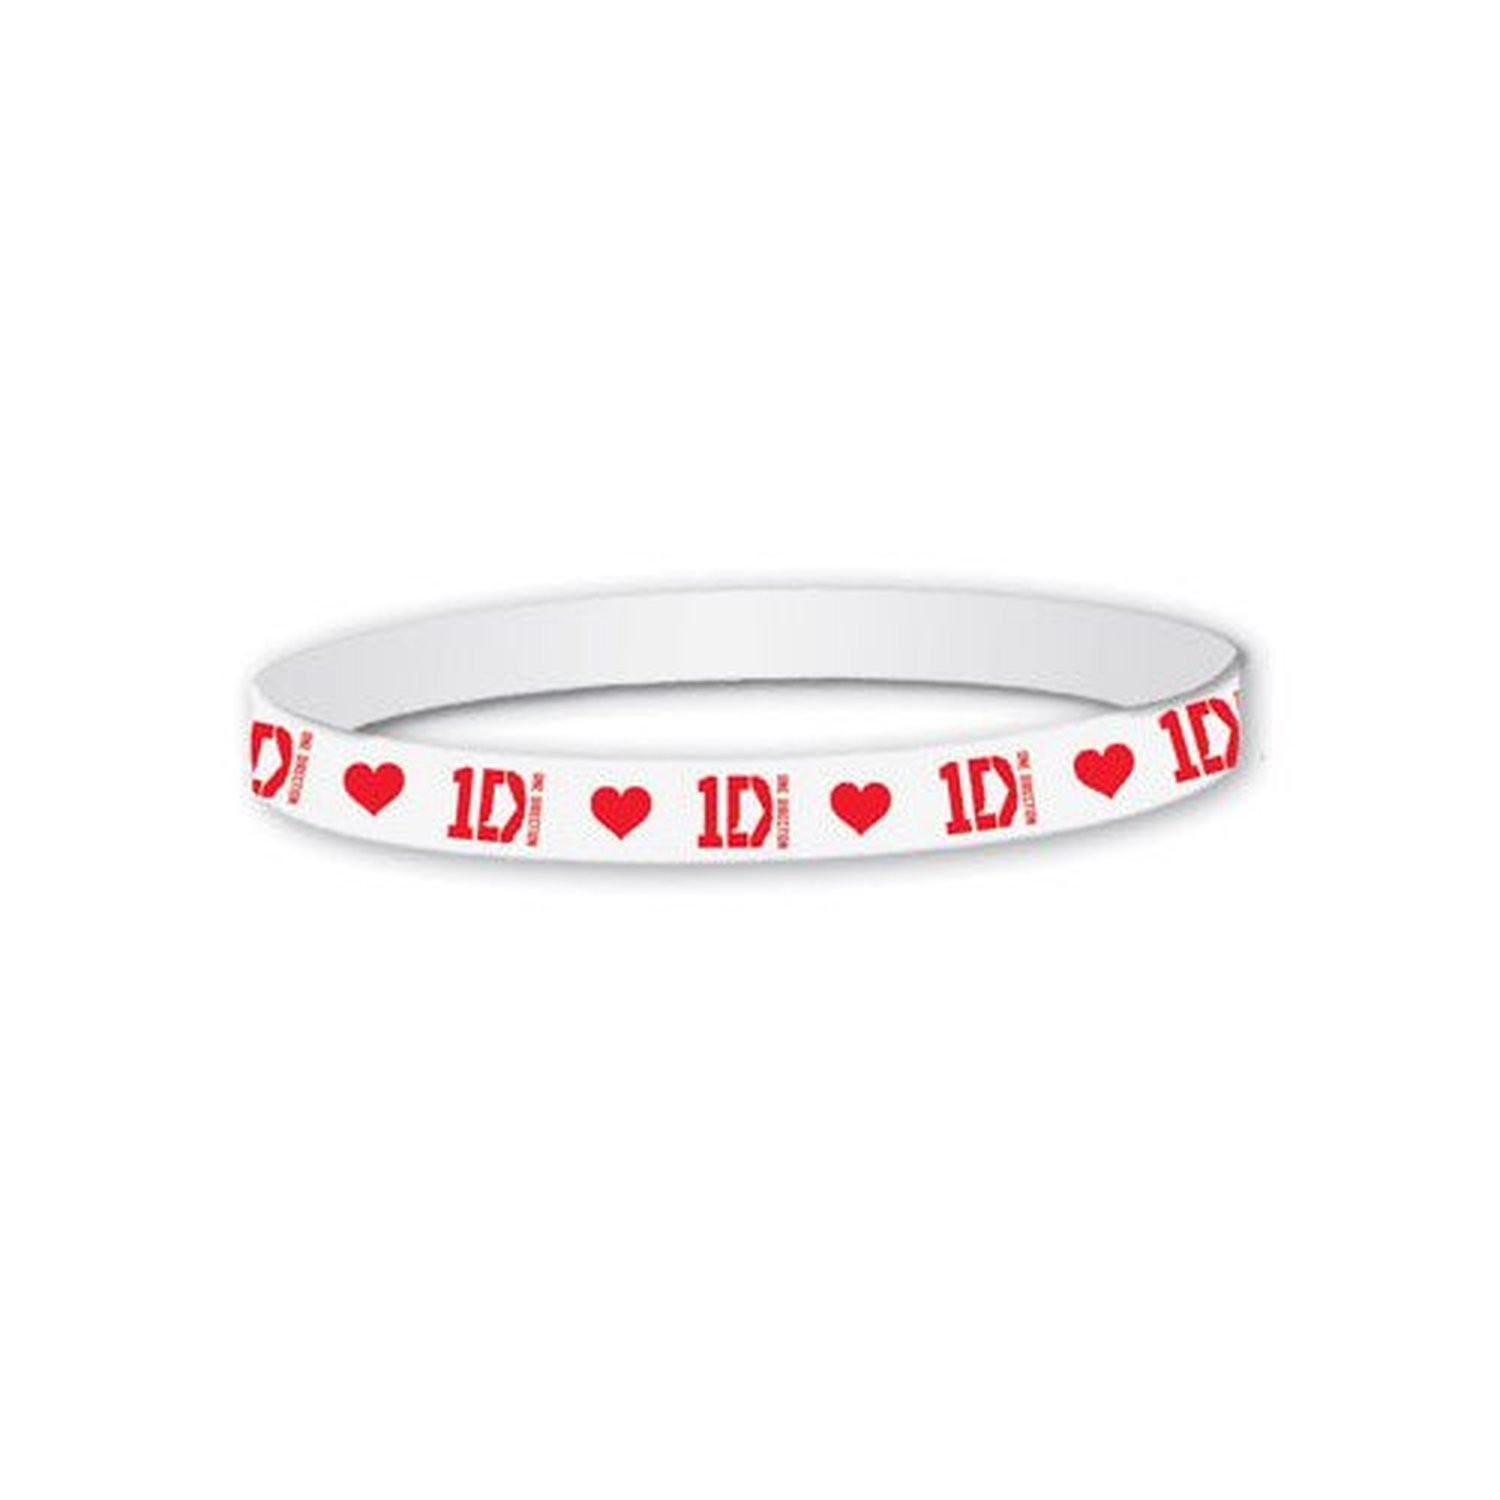 1D One Direction Harry Styles Gummy White Bracelet Wristband Fan Gift Official